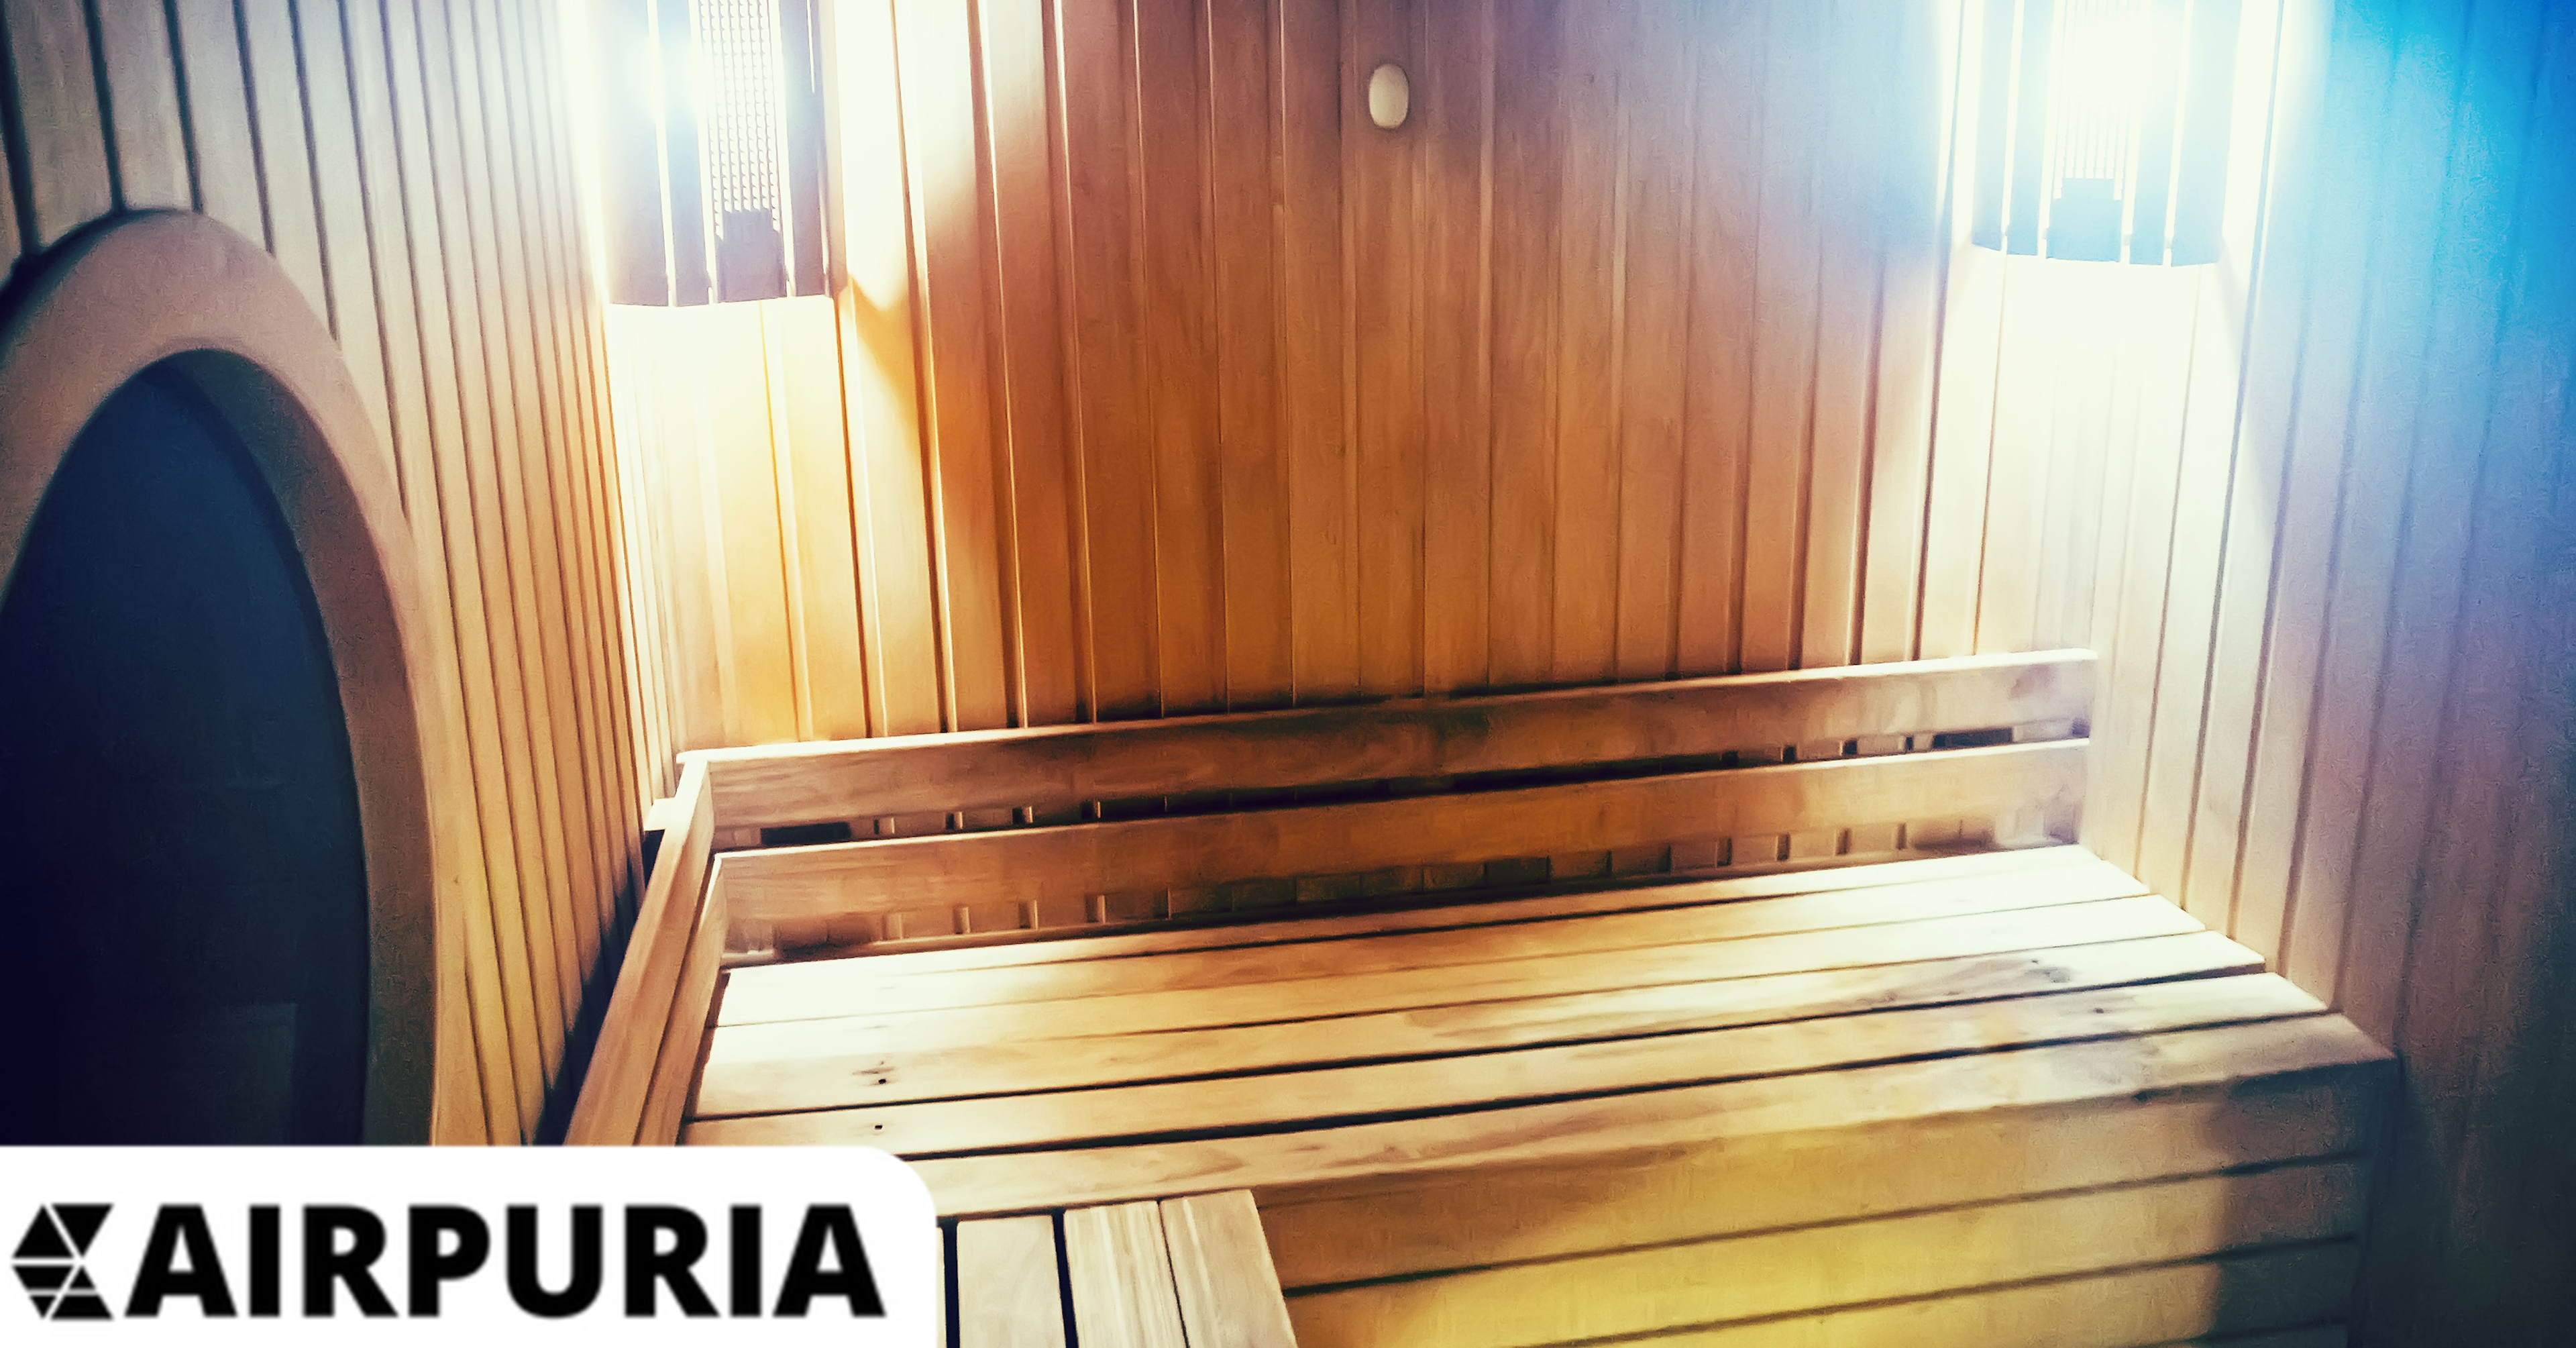 Are Infrared Saunas Safe?